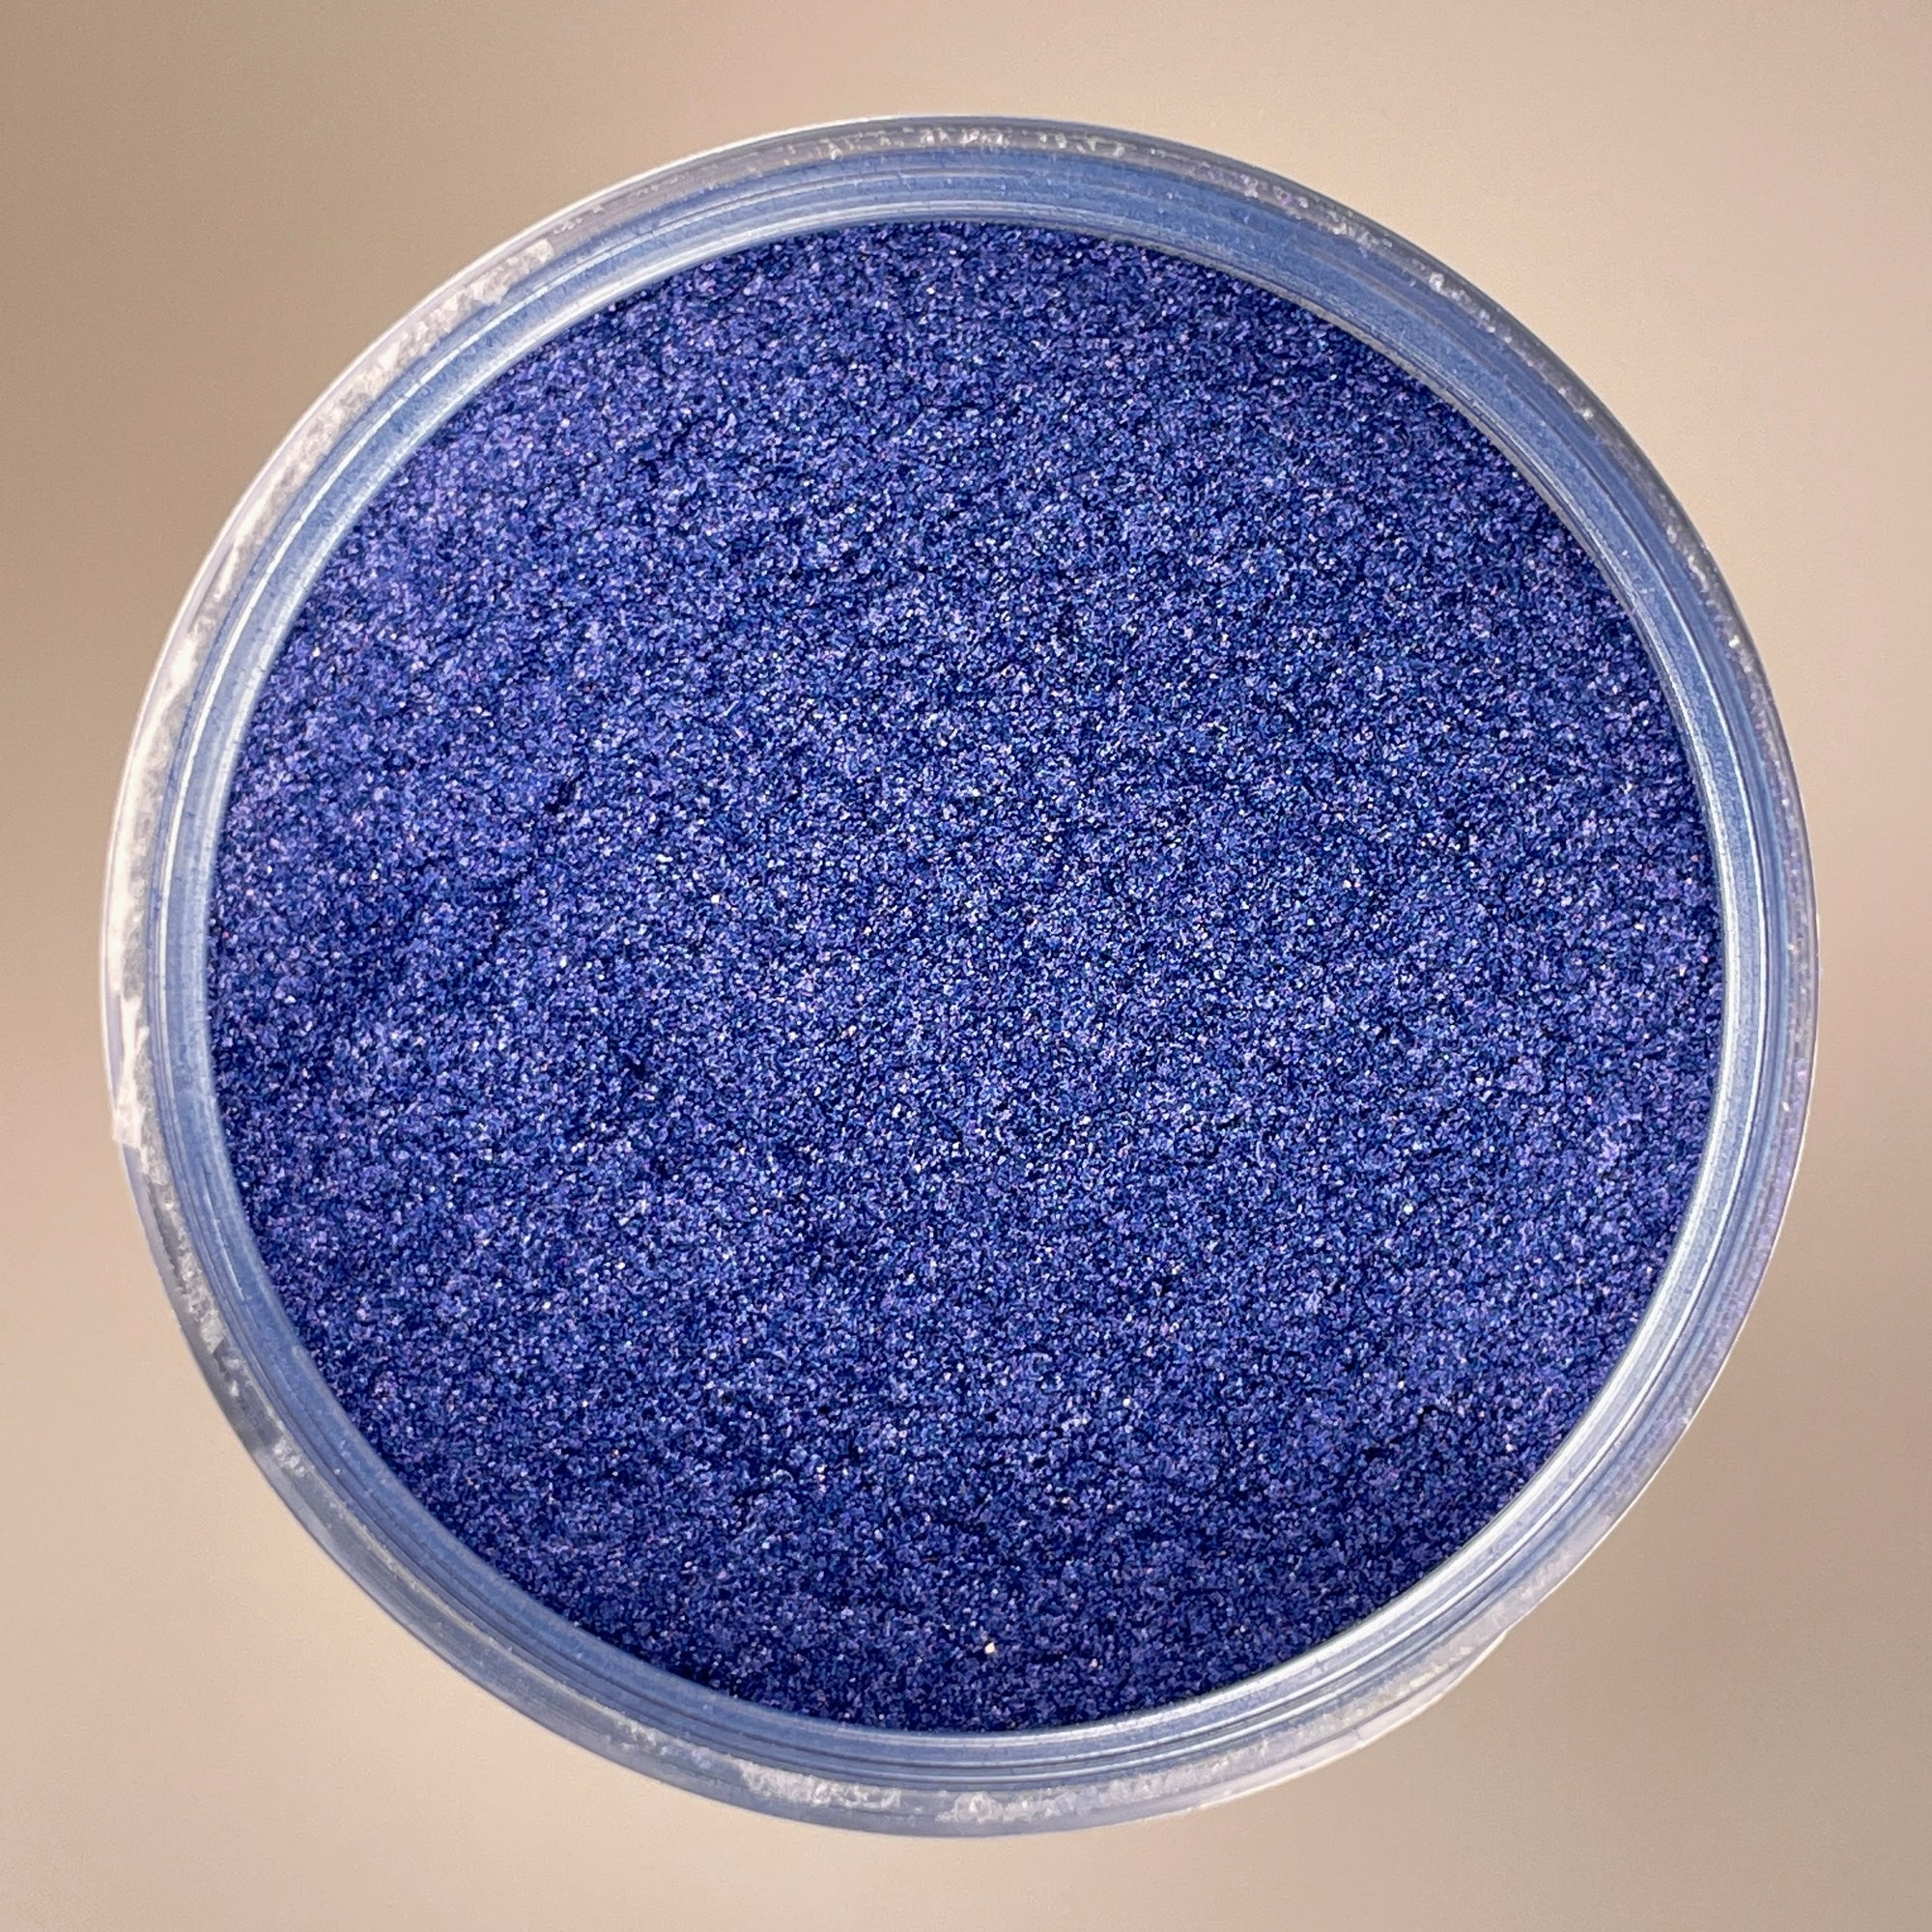 Star Blue Violet Mica Powder